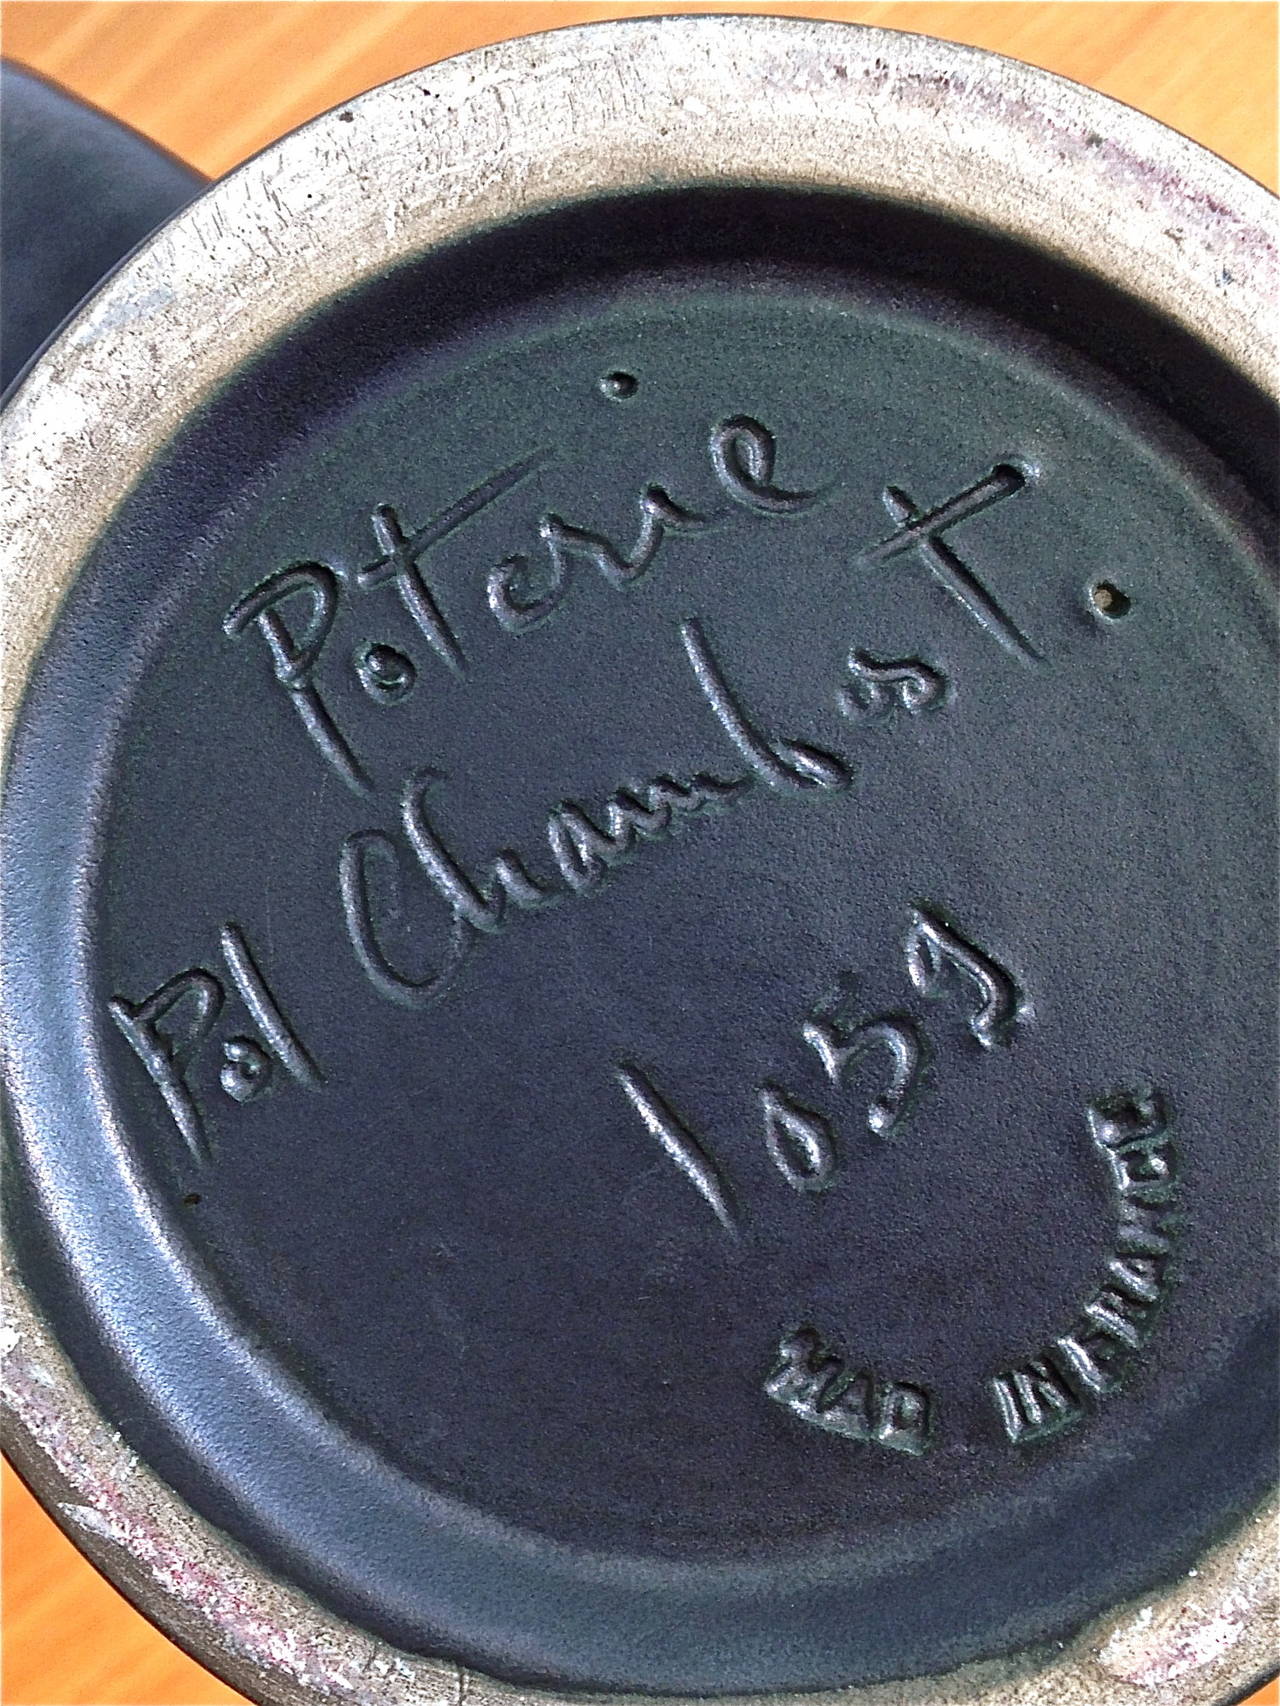 Pitcher by Pol Chambost (1906-1983)
Circa 1955